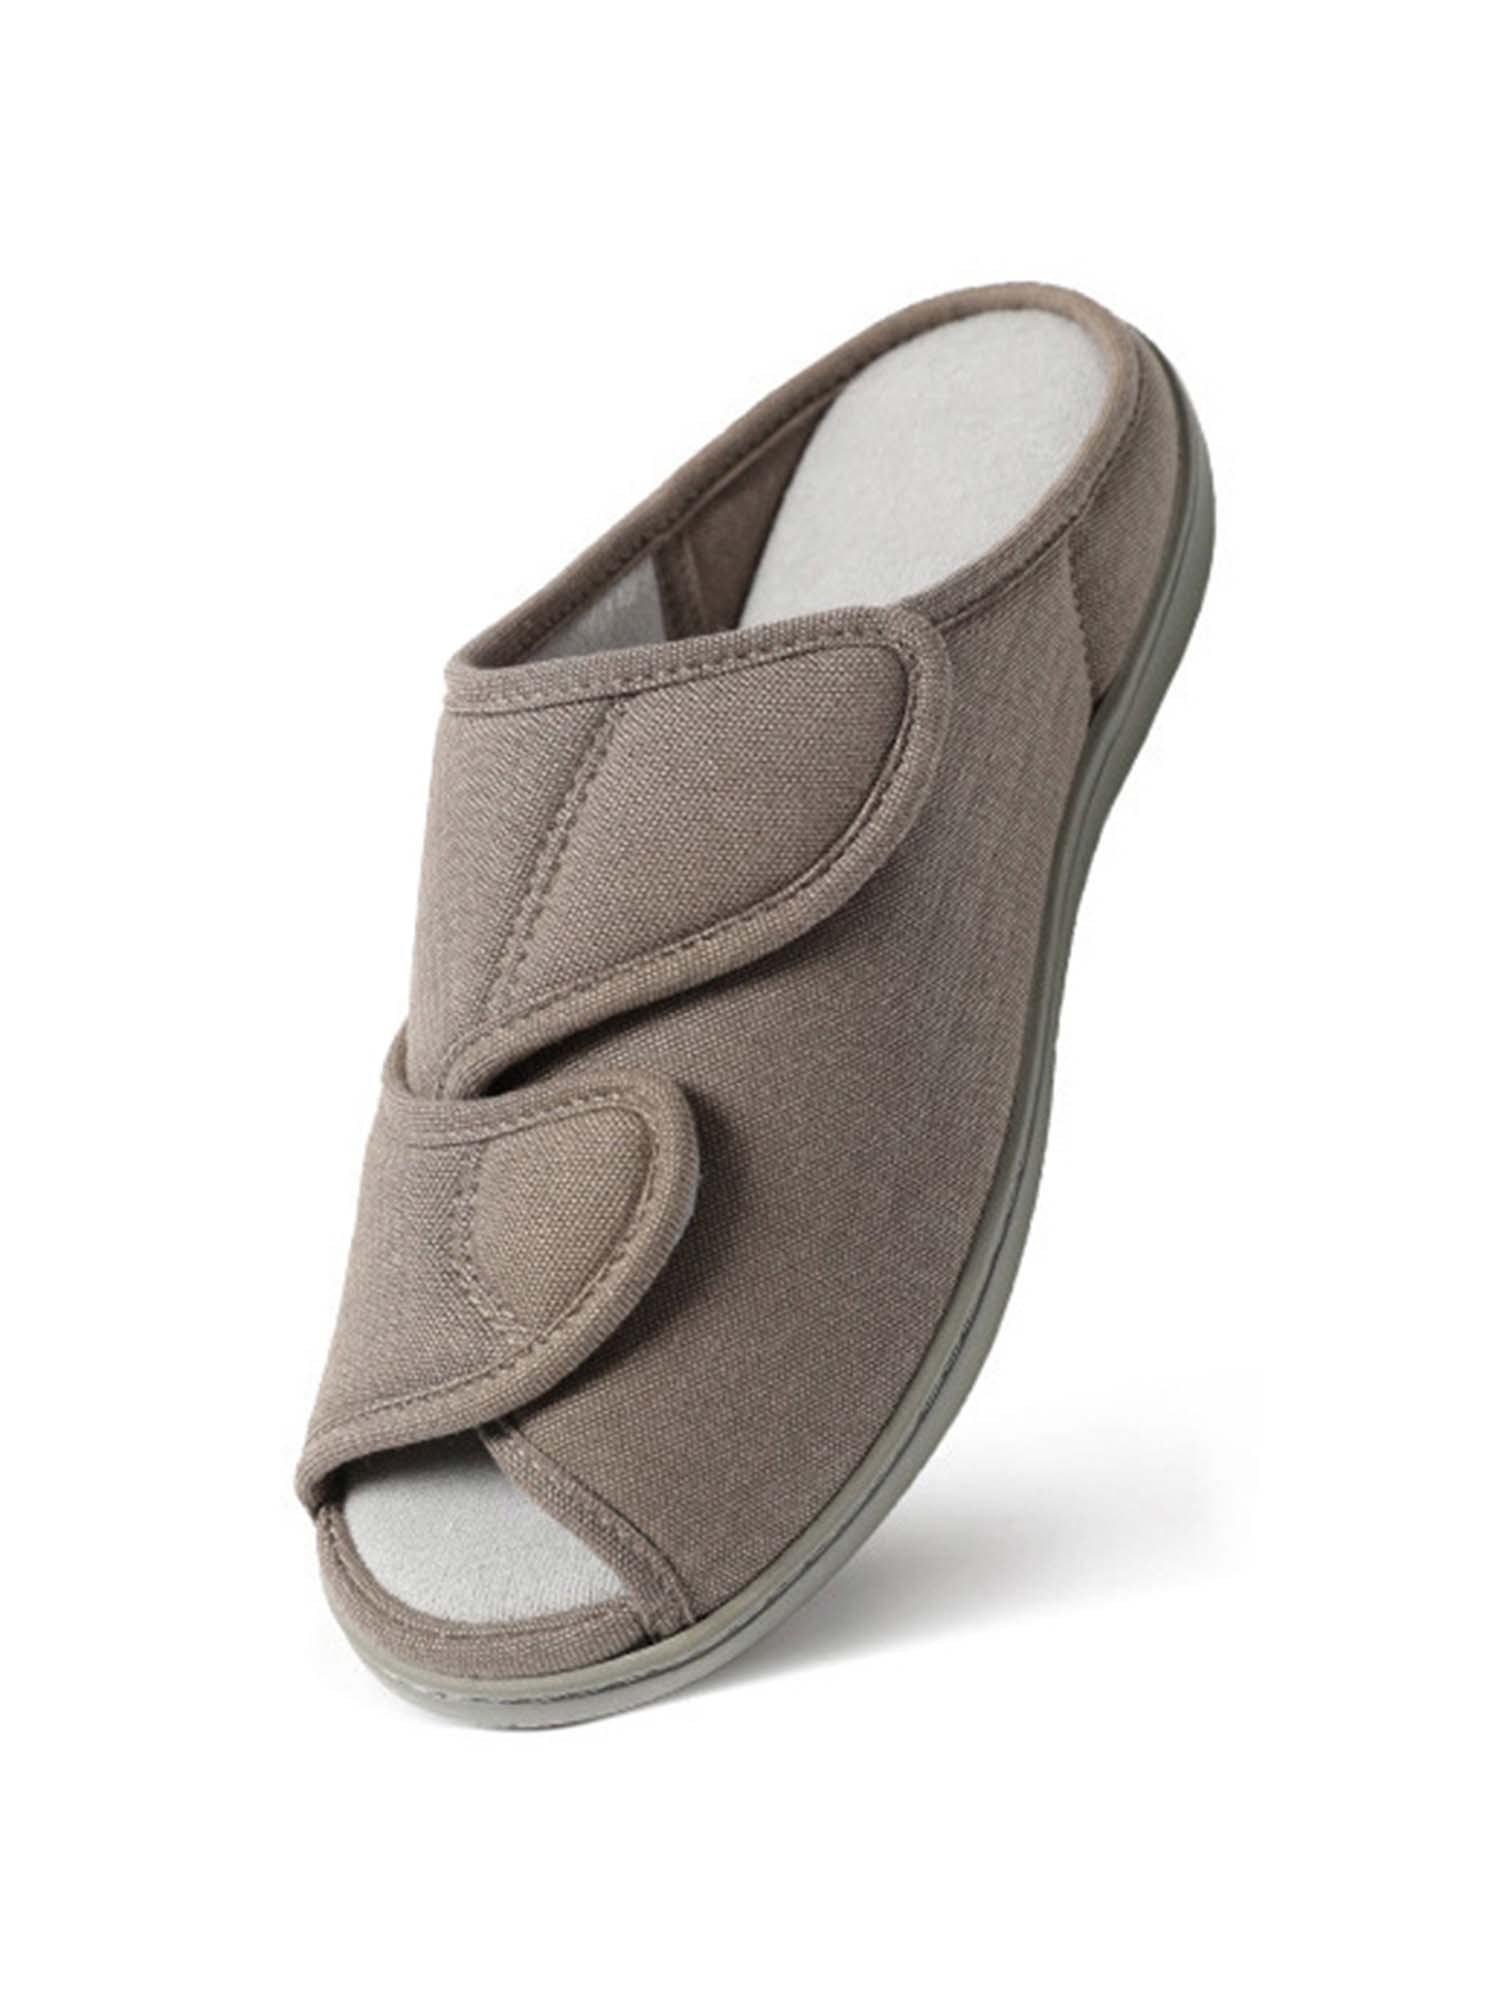 Rockomi Diabetic Shoes Slippers for Women Toe Sandals for Swollen Feet Edema with Adjustable 8-8.5 - Walmart.com